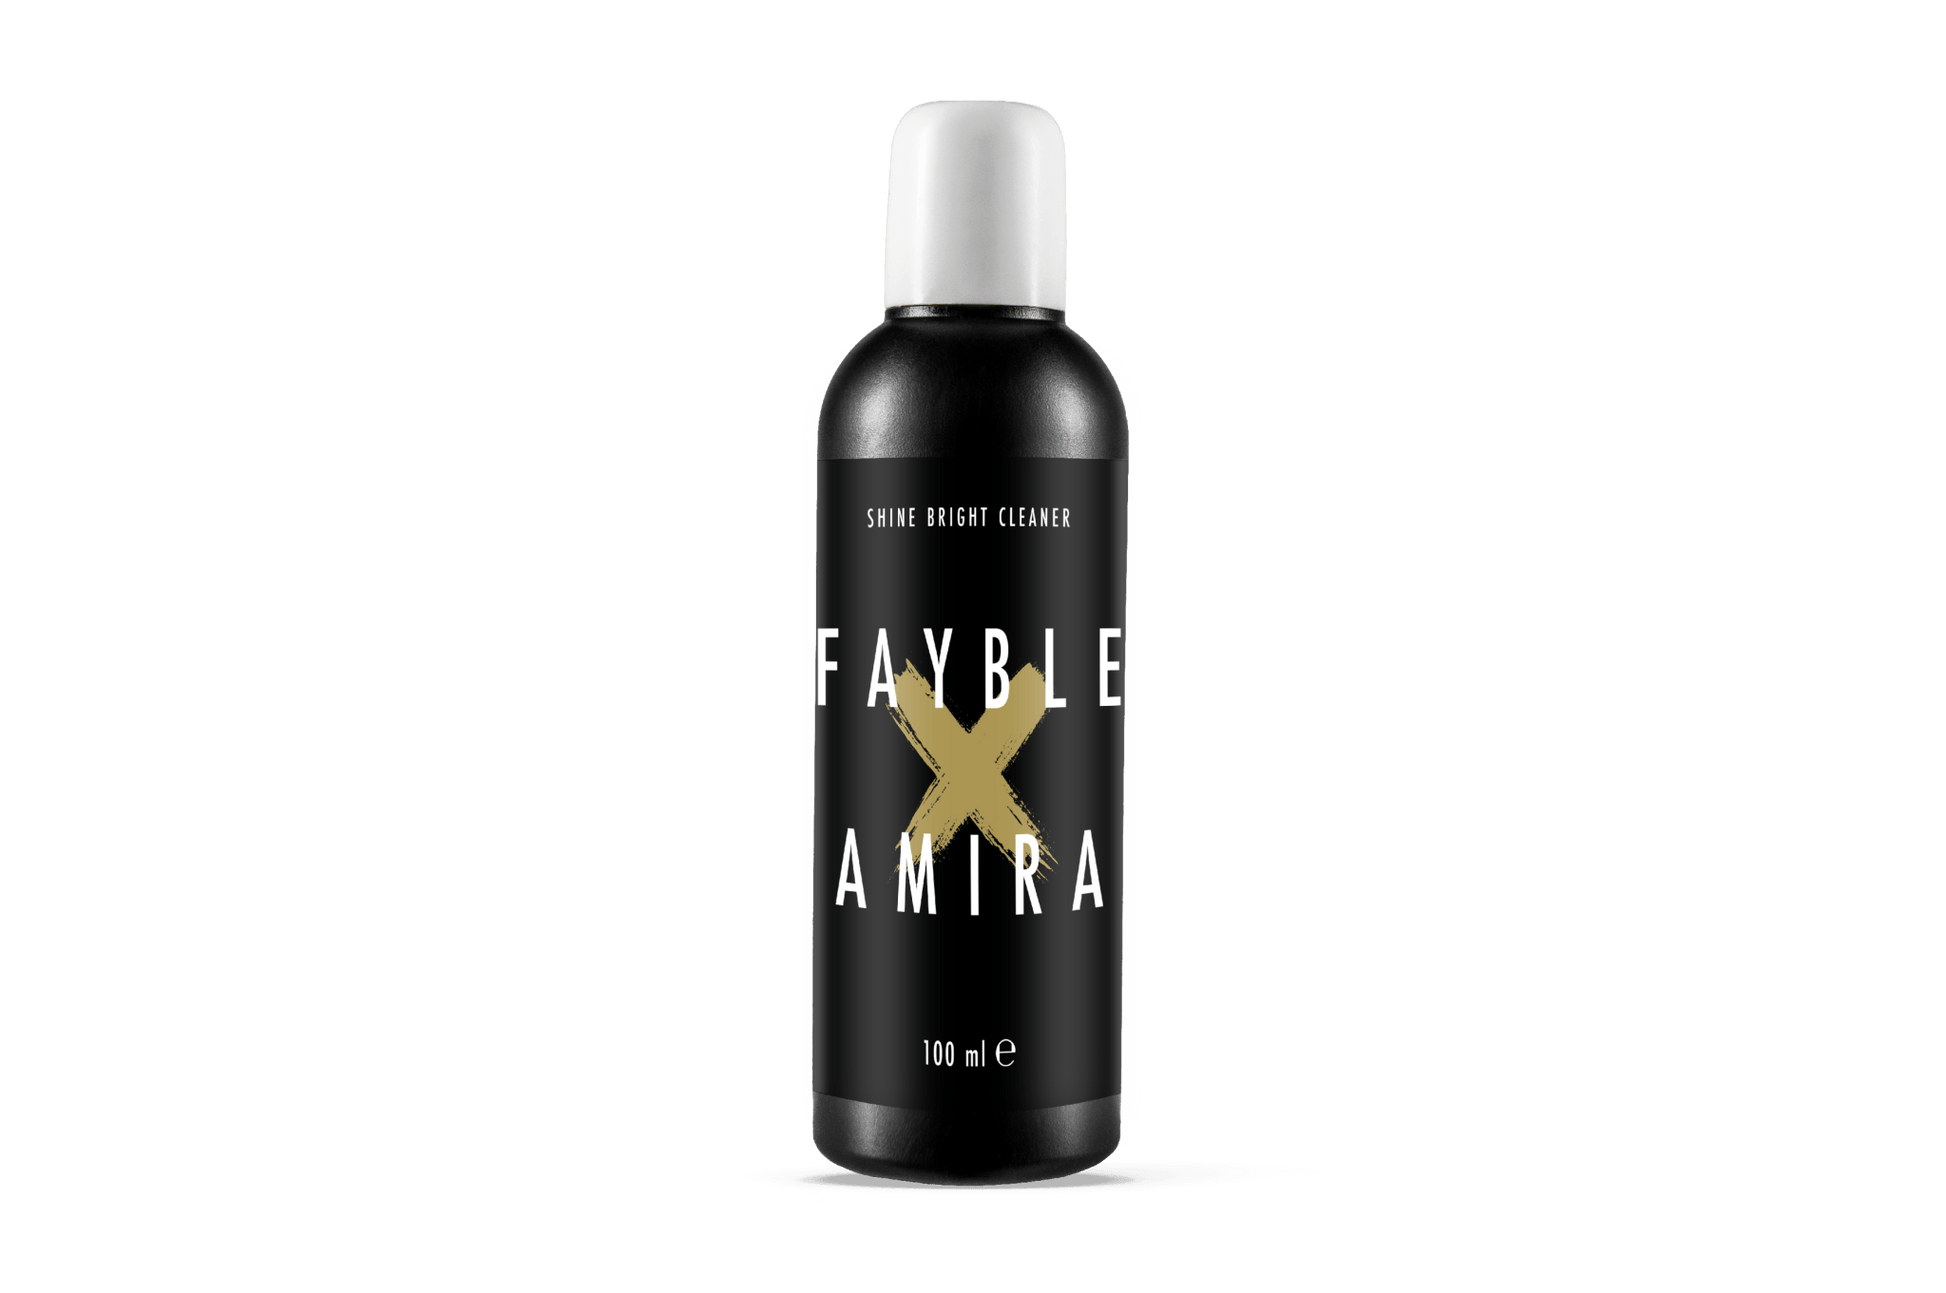 FAYBLE × AMIRA  Shine Bright Cleaner 100 ml